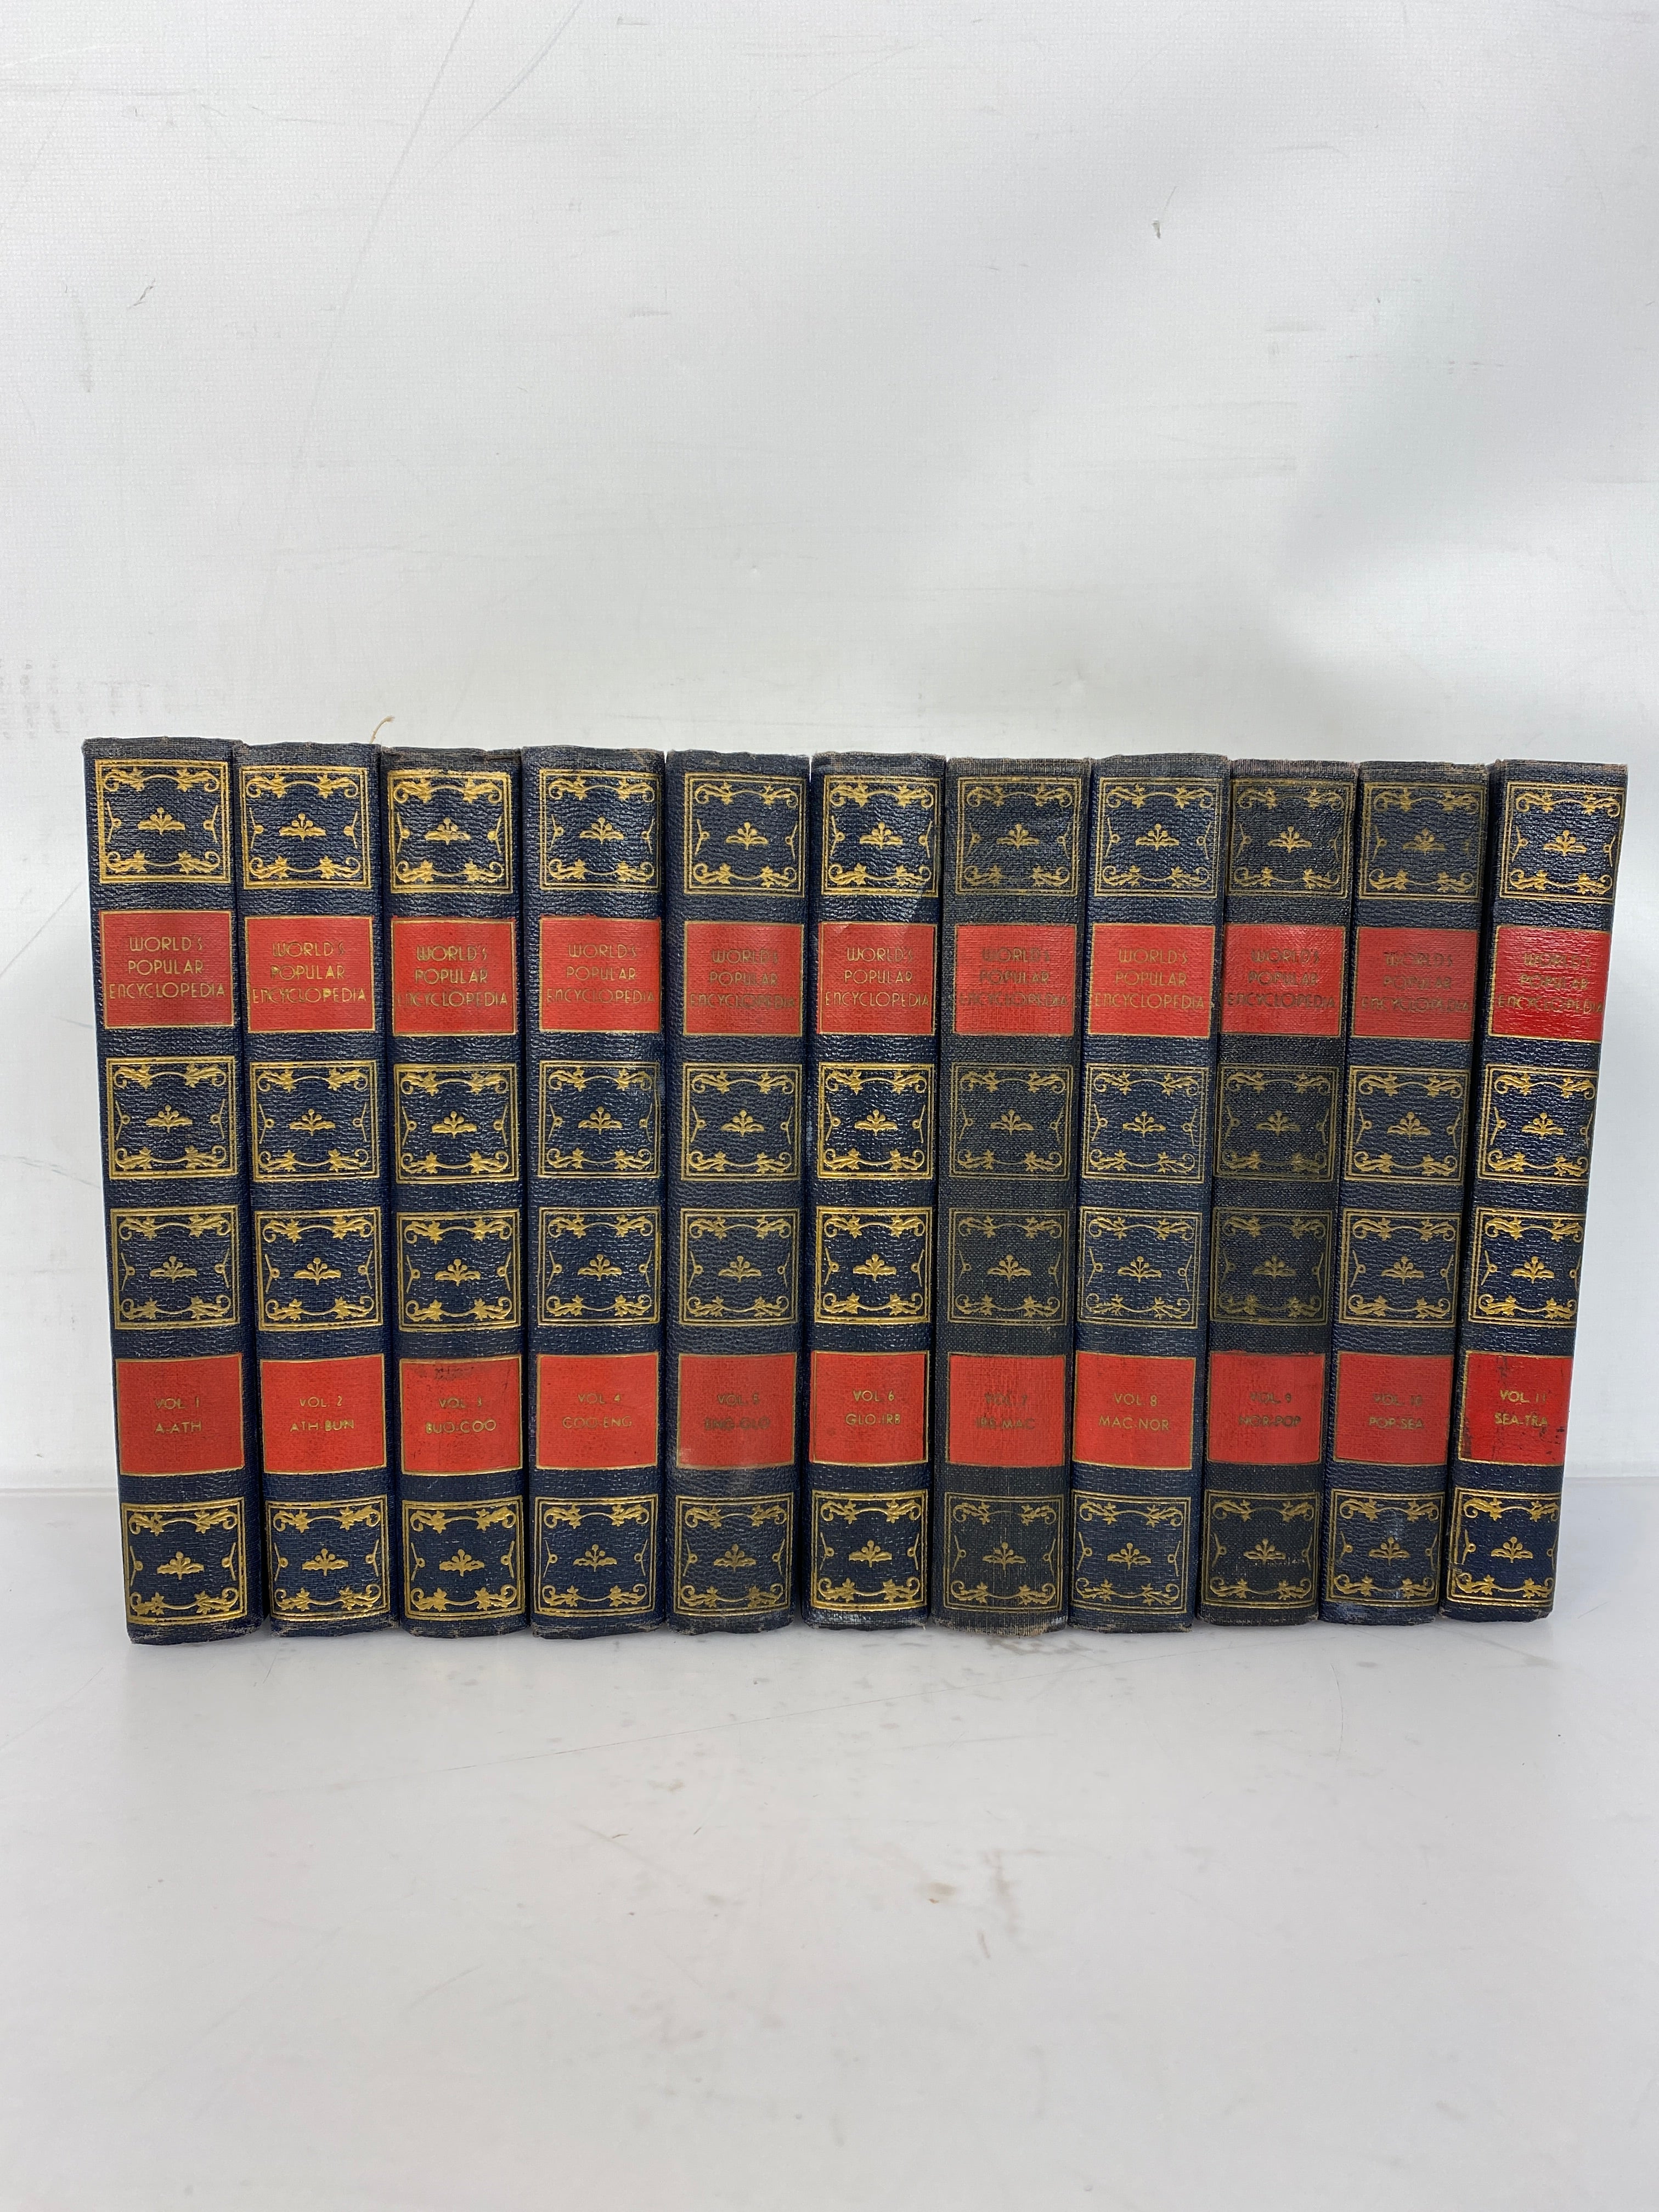 Vintage World's Popular Encyclopedia Volumes 1-11 1937 The World Syndicate Publishing Company HC